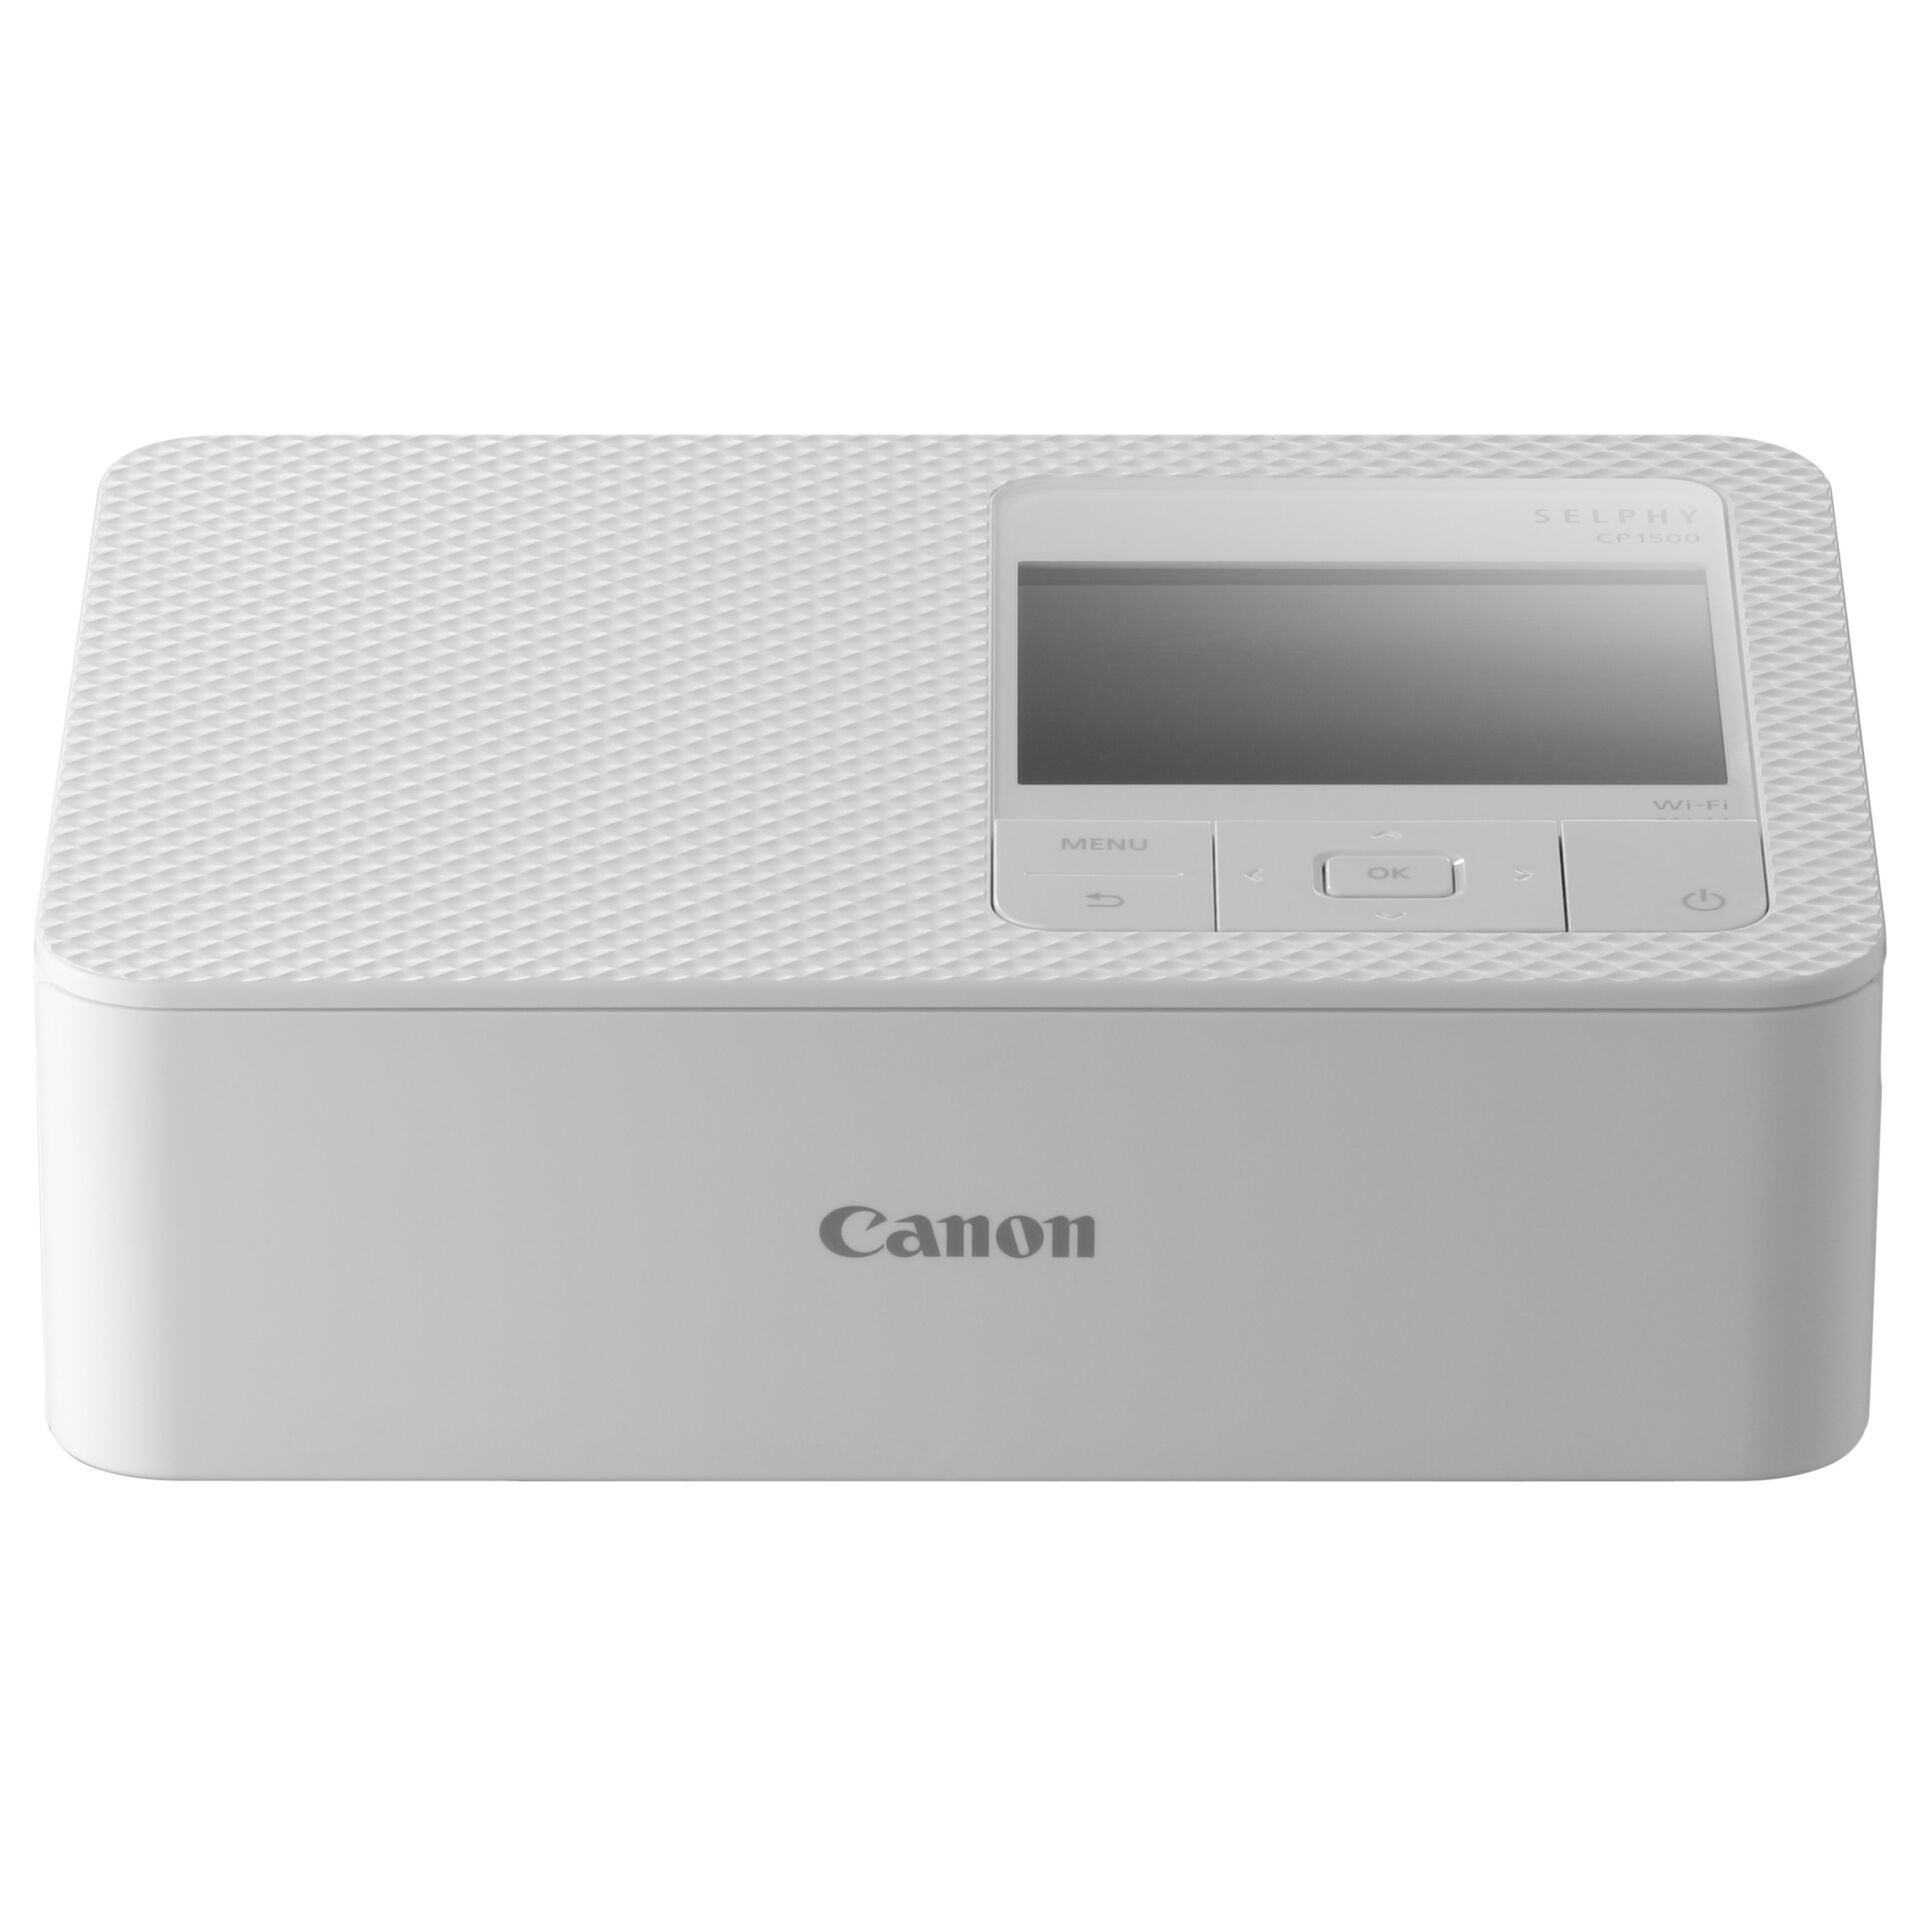 Canon Selphy CP1500 weiß, Thermosublimationsdrucker Fotodrucker